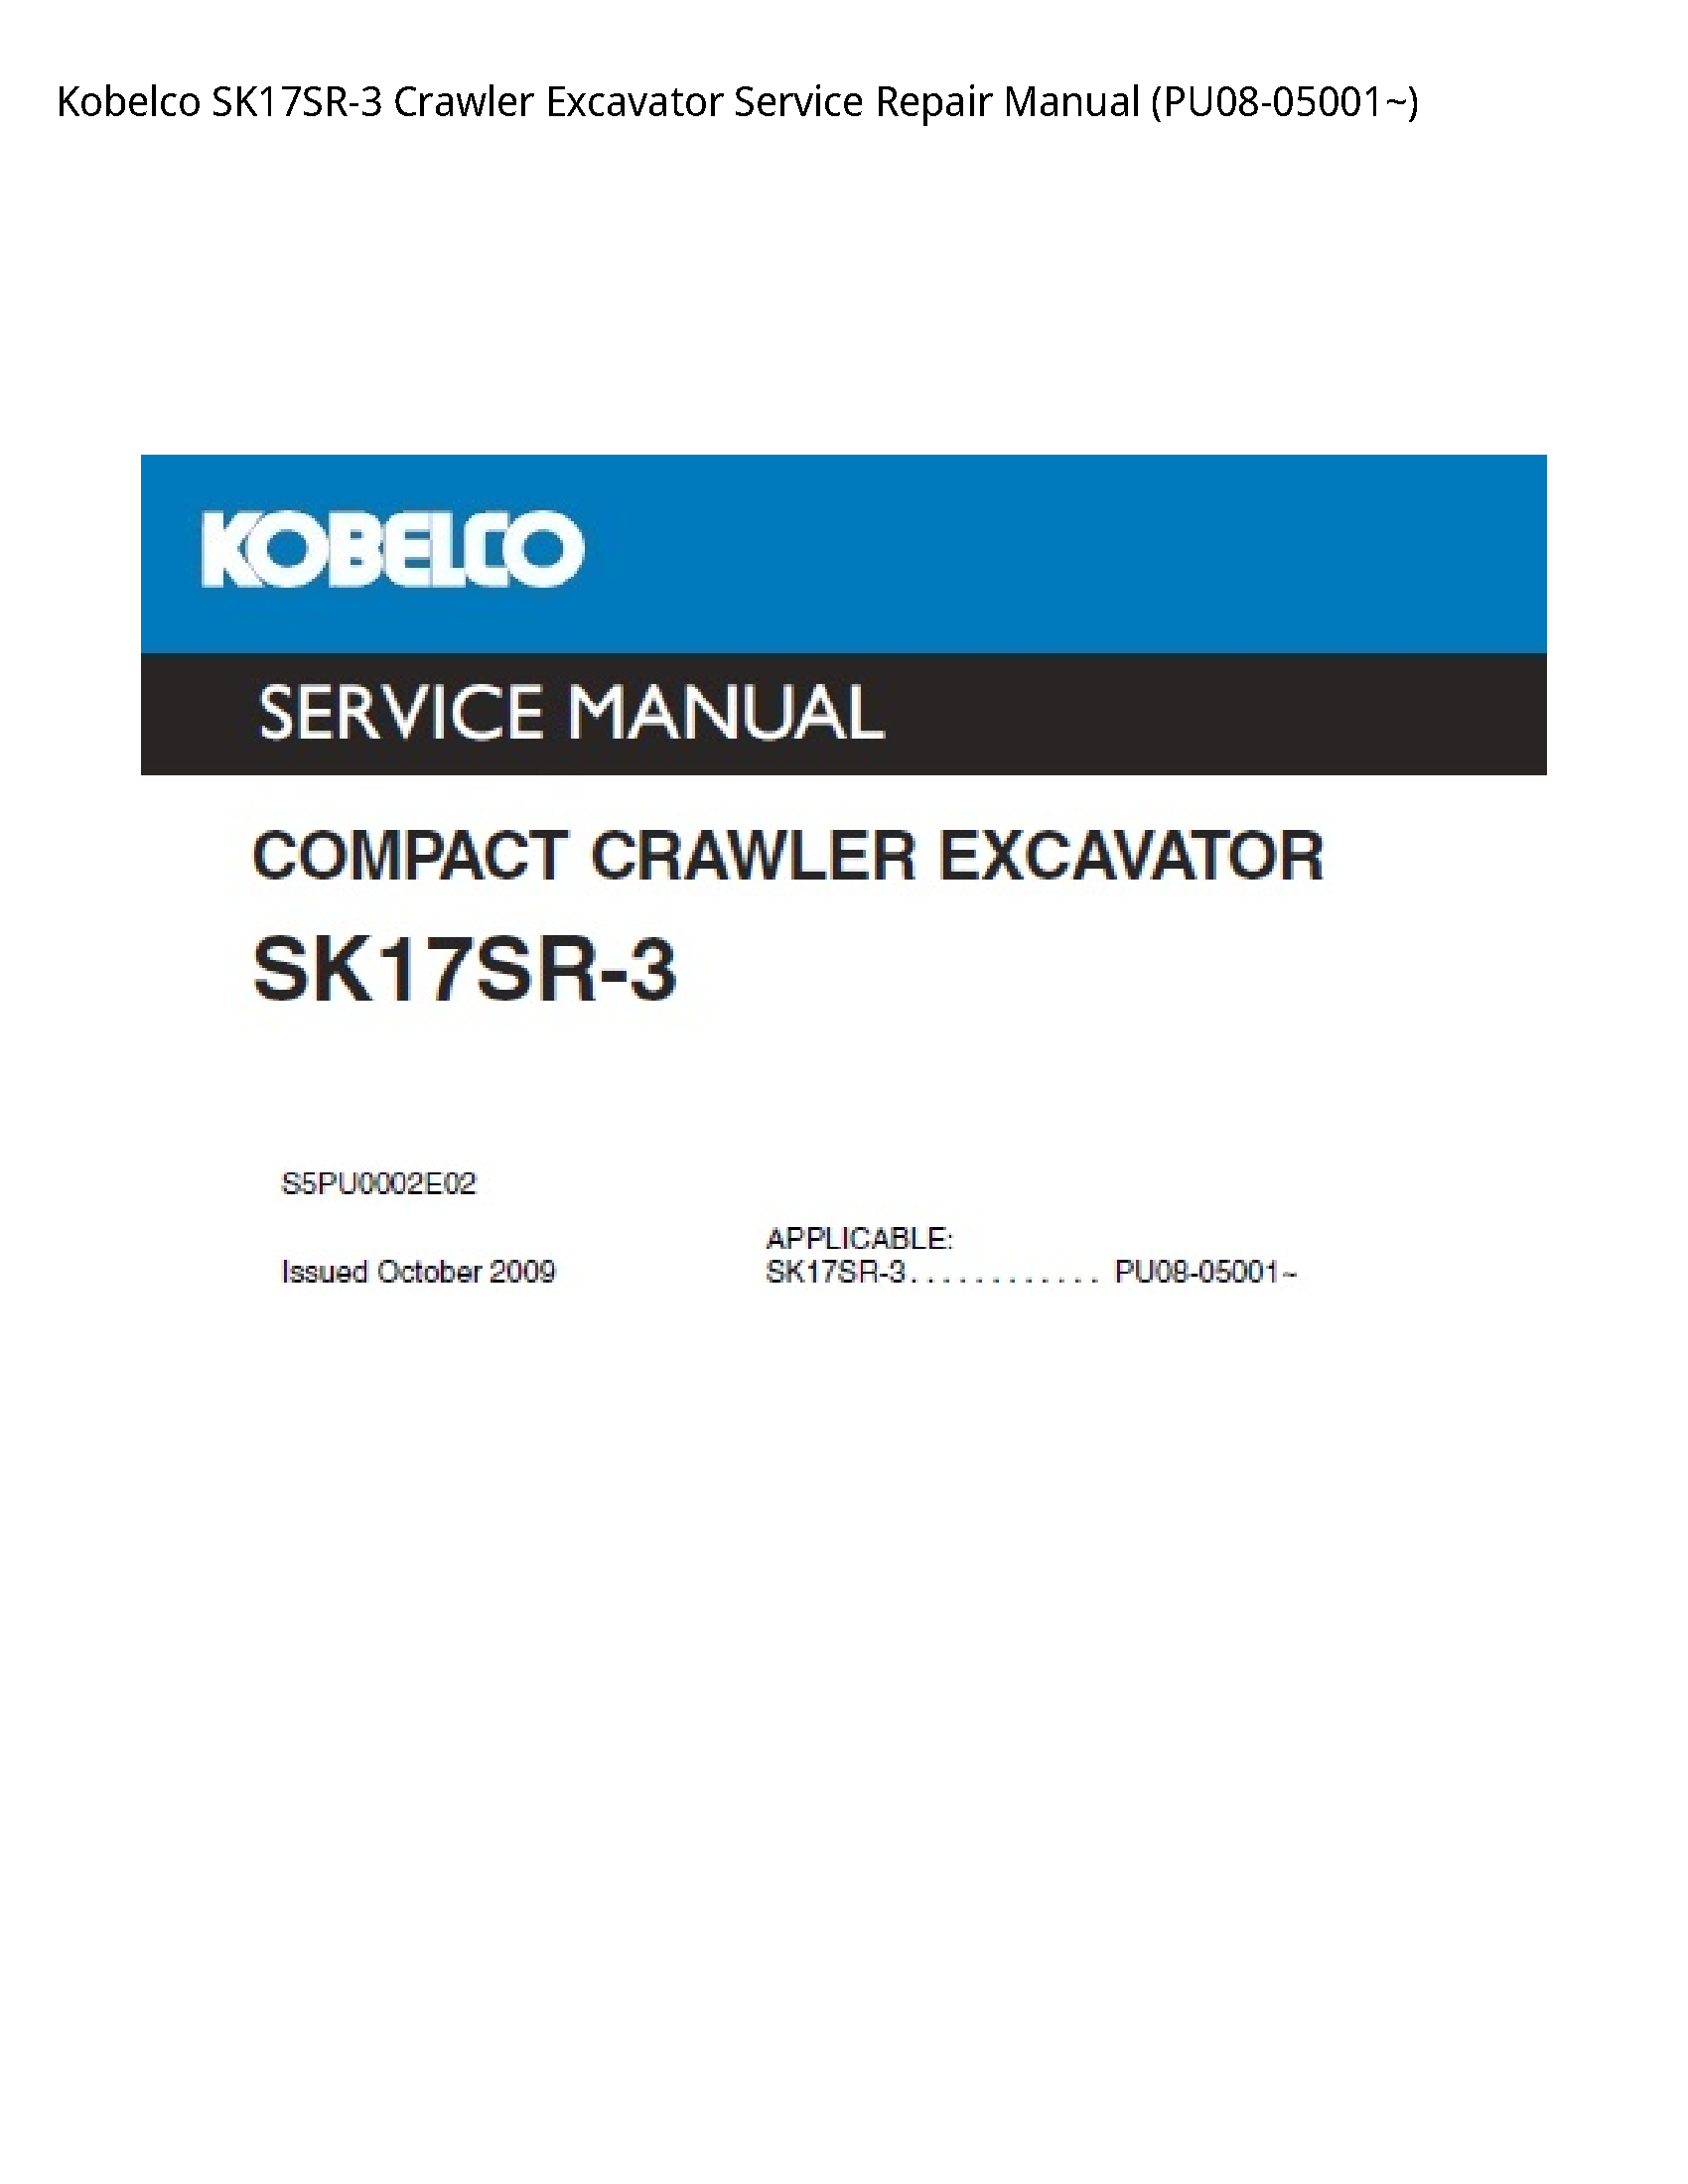 Kobelco SK17SR-3 Crawler Excavator manual